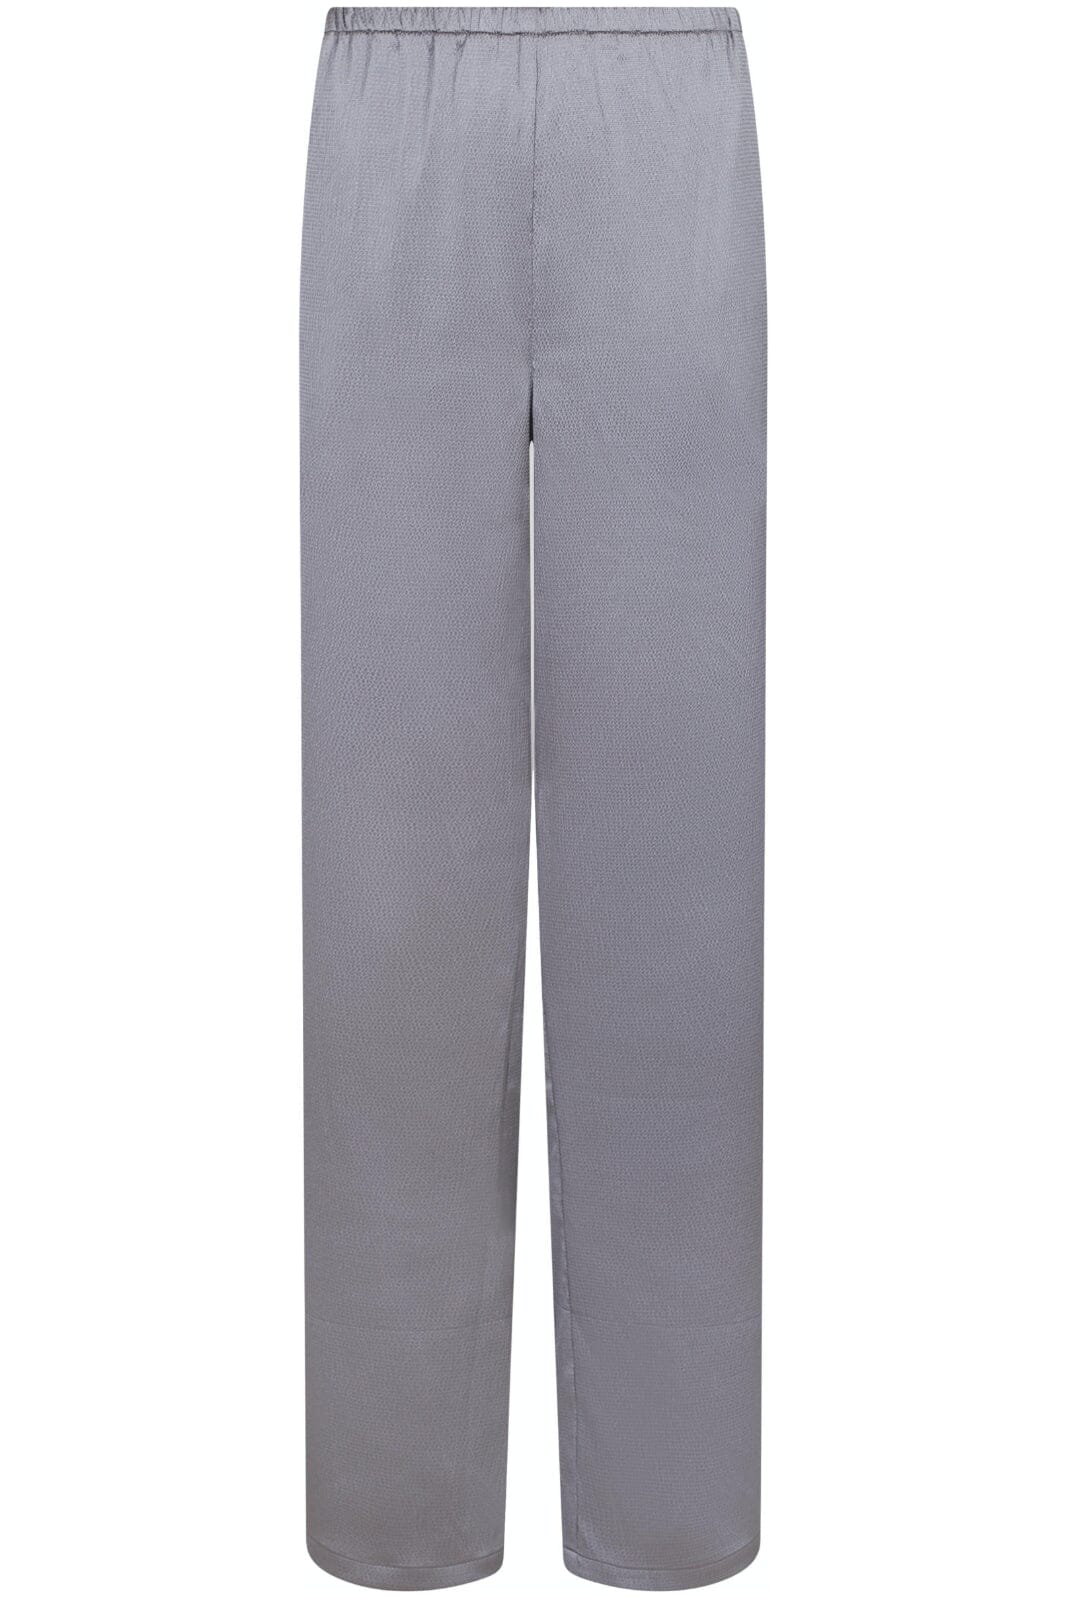 Neo Noir - Nola Crepe Satin Pants - Grey Bukser 